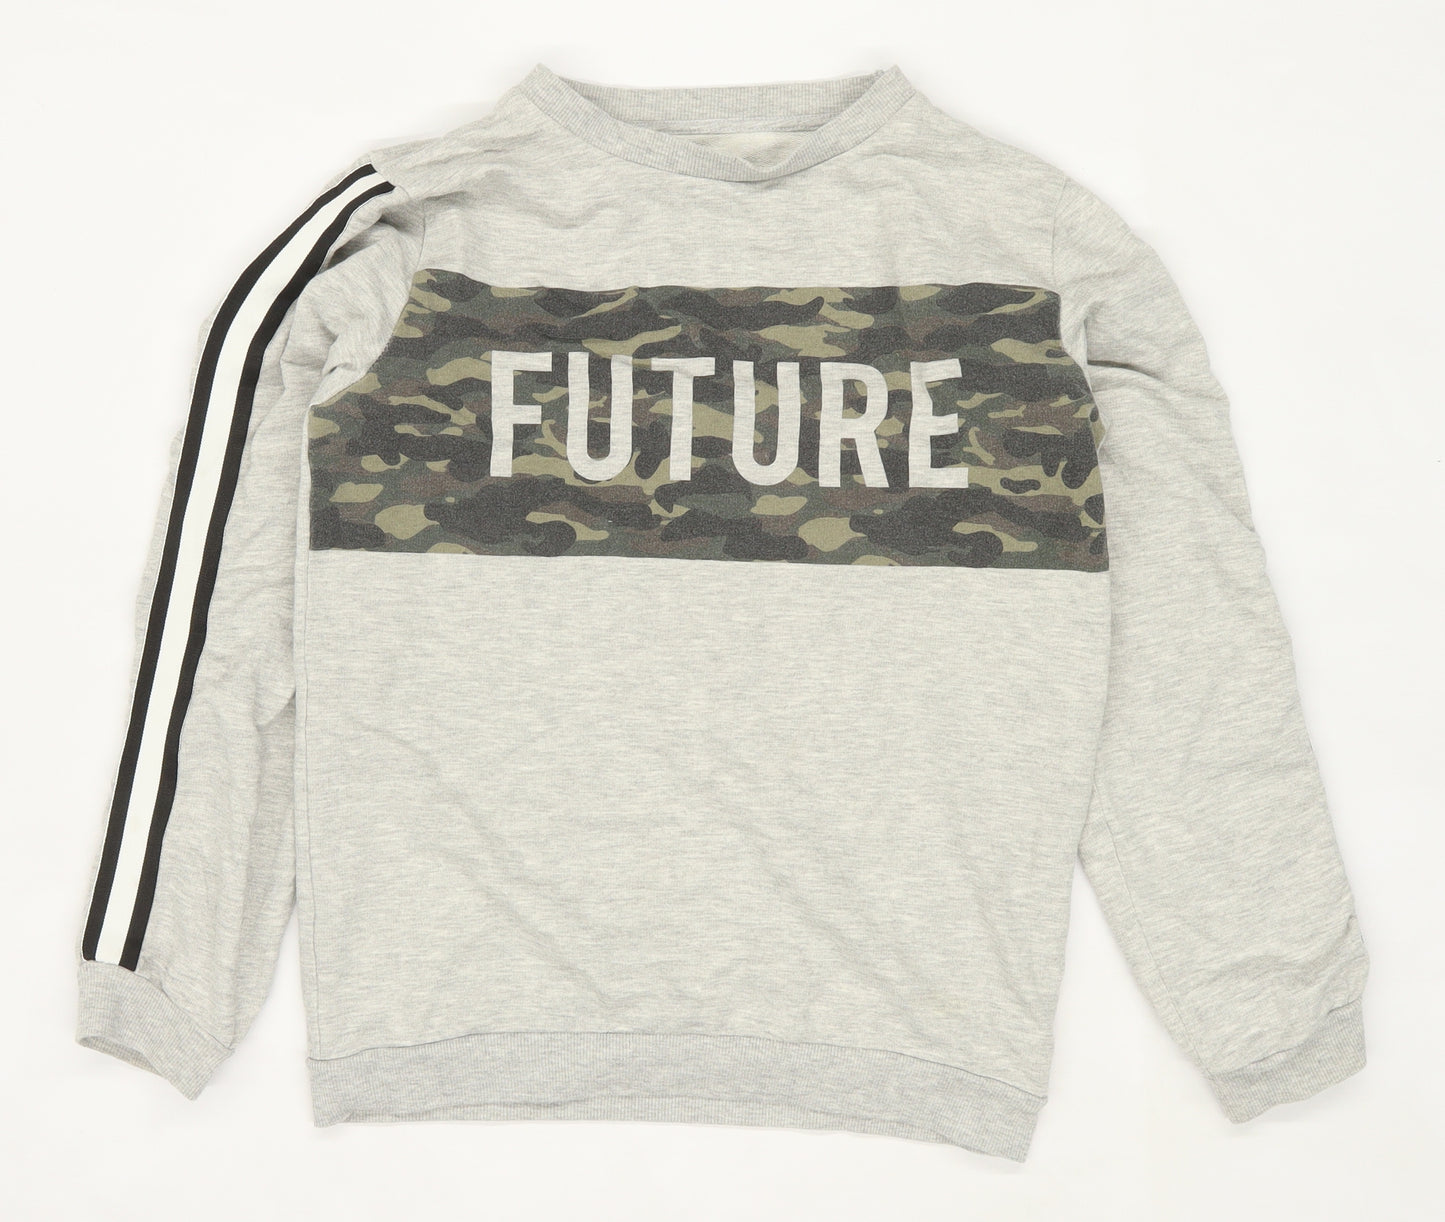 Pep & Co Boys Camouflage Grey Future Sweatshirt Age 12-13 Years